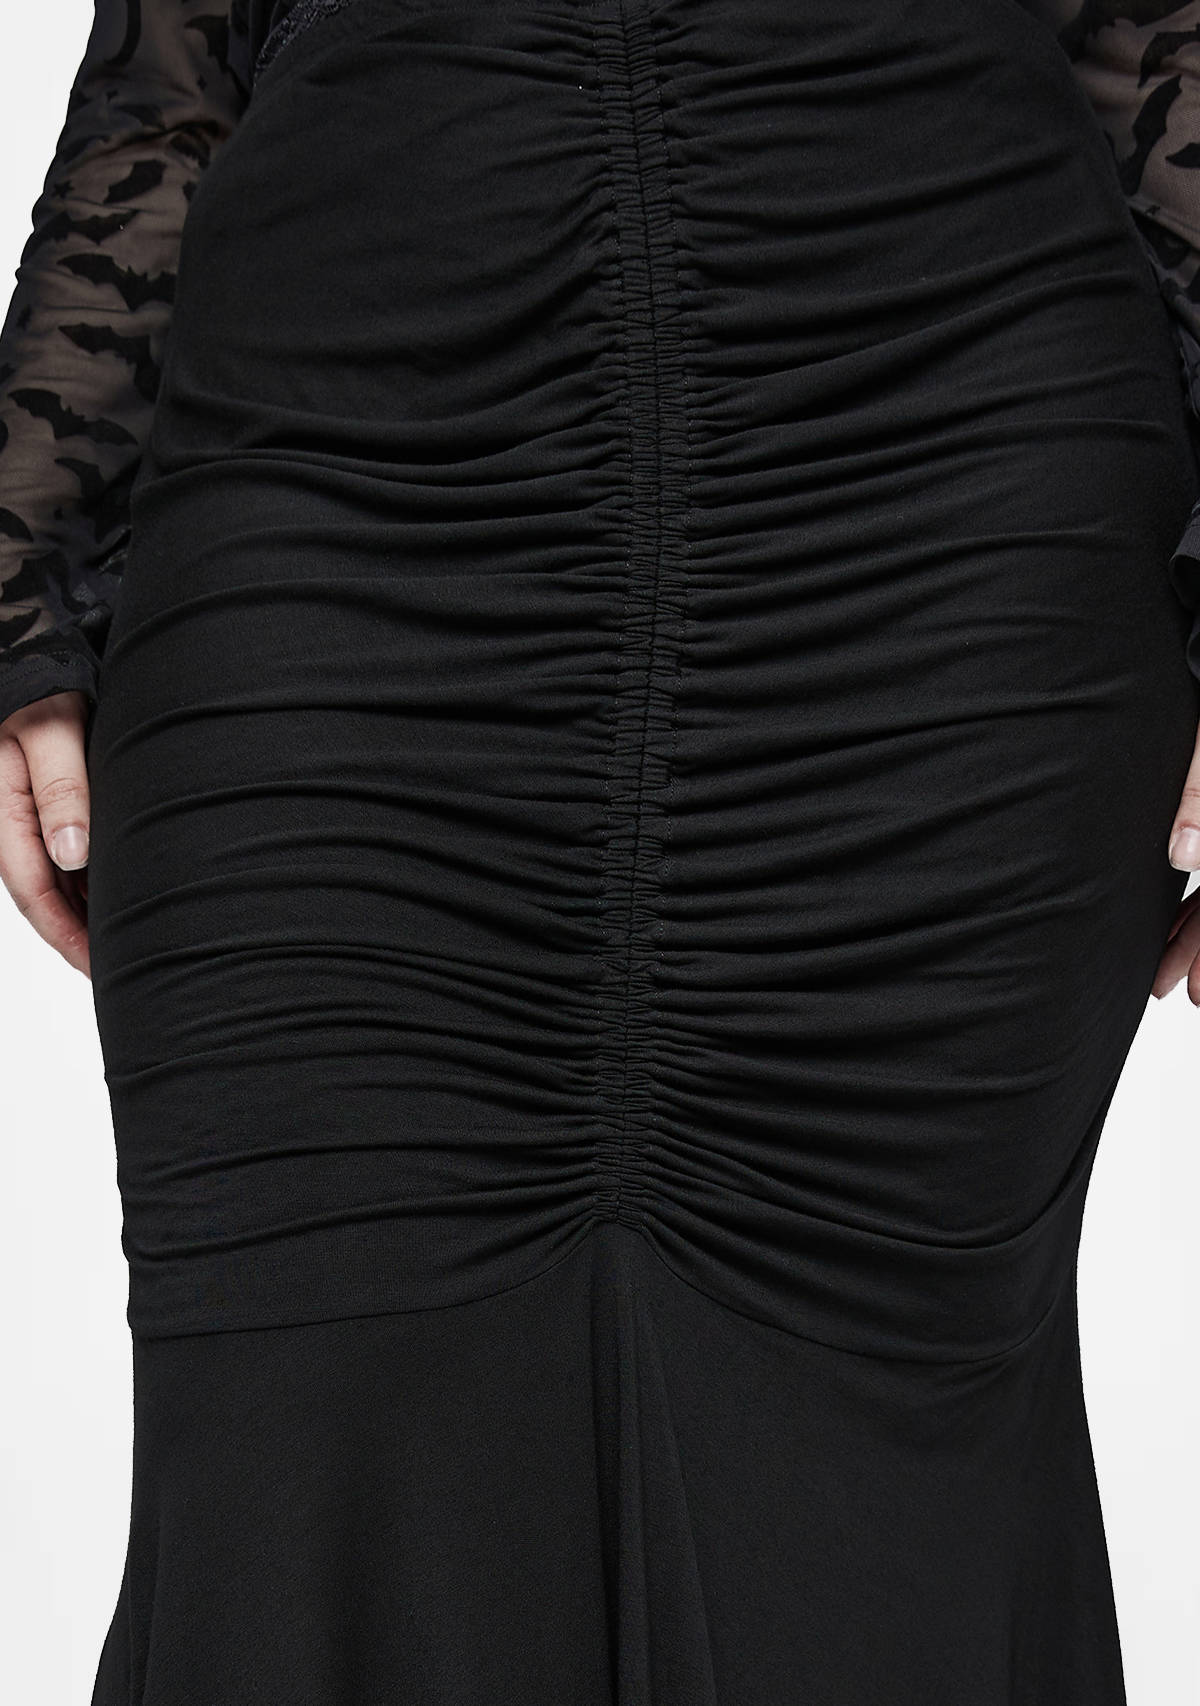 Goth Plus Size Stretch Smocked Skirt